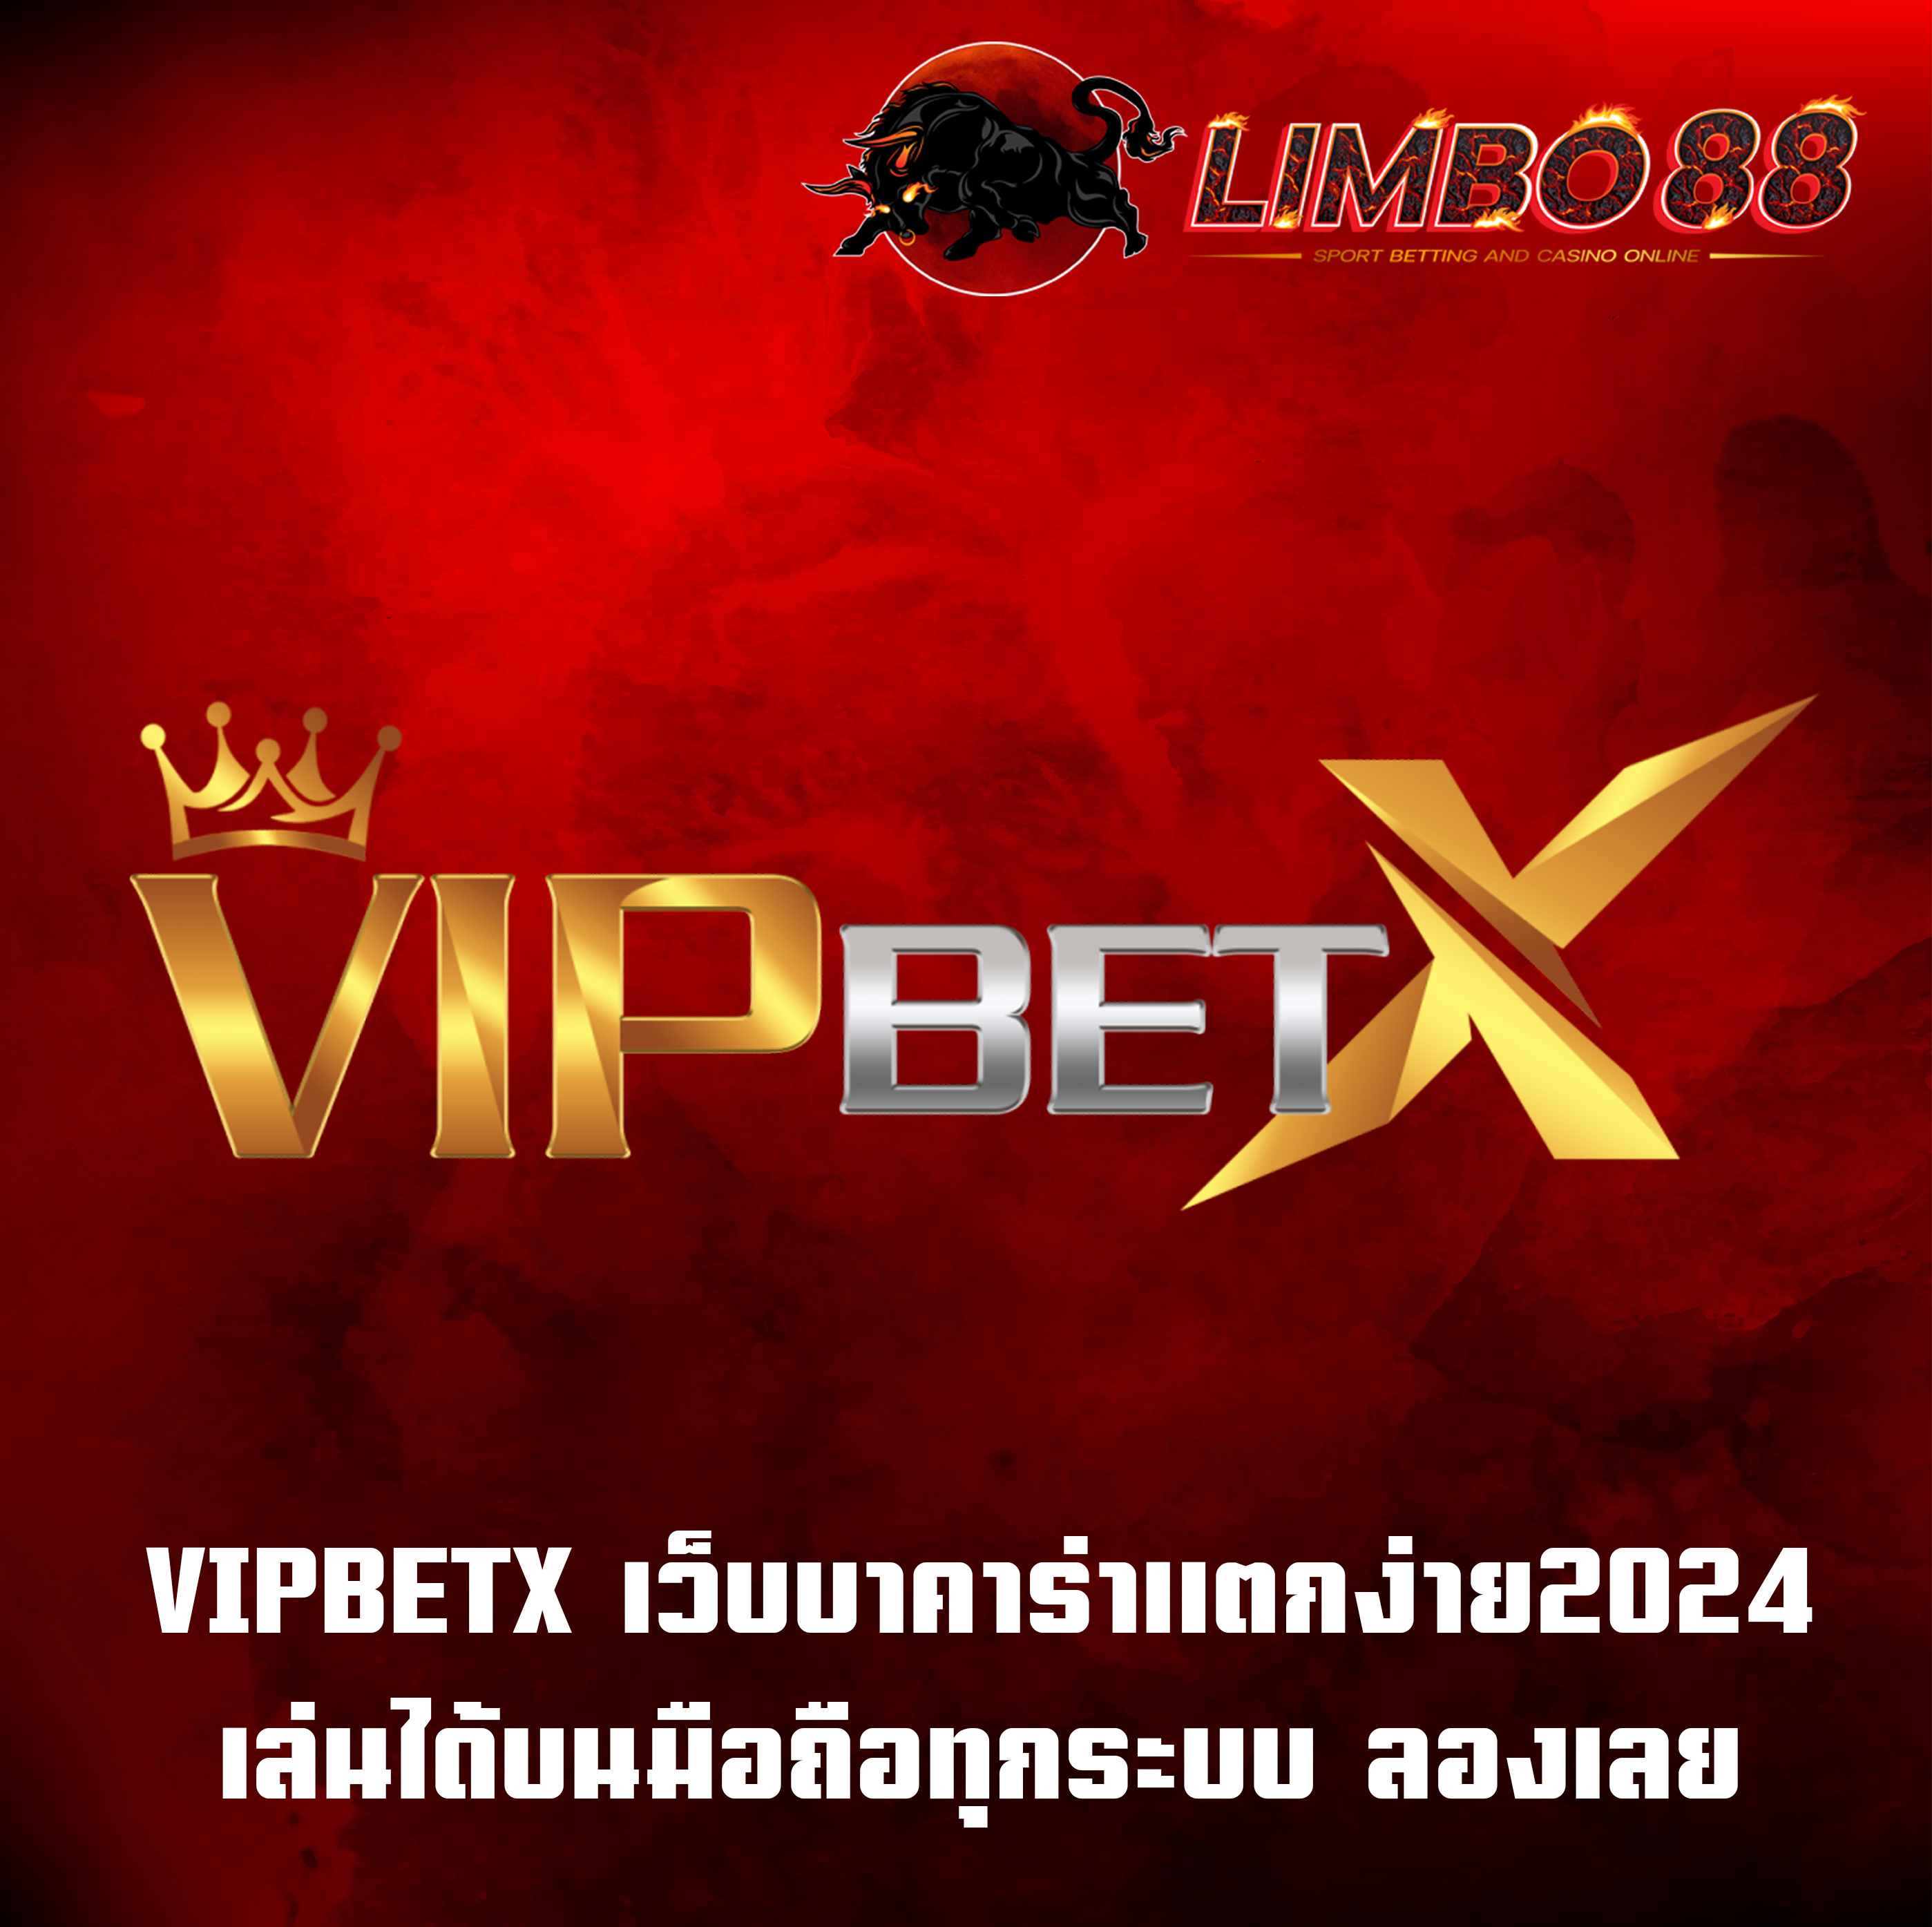 VIPBETX